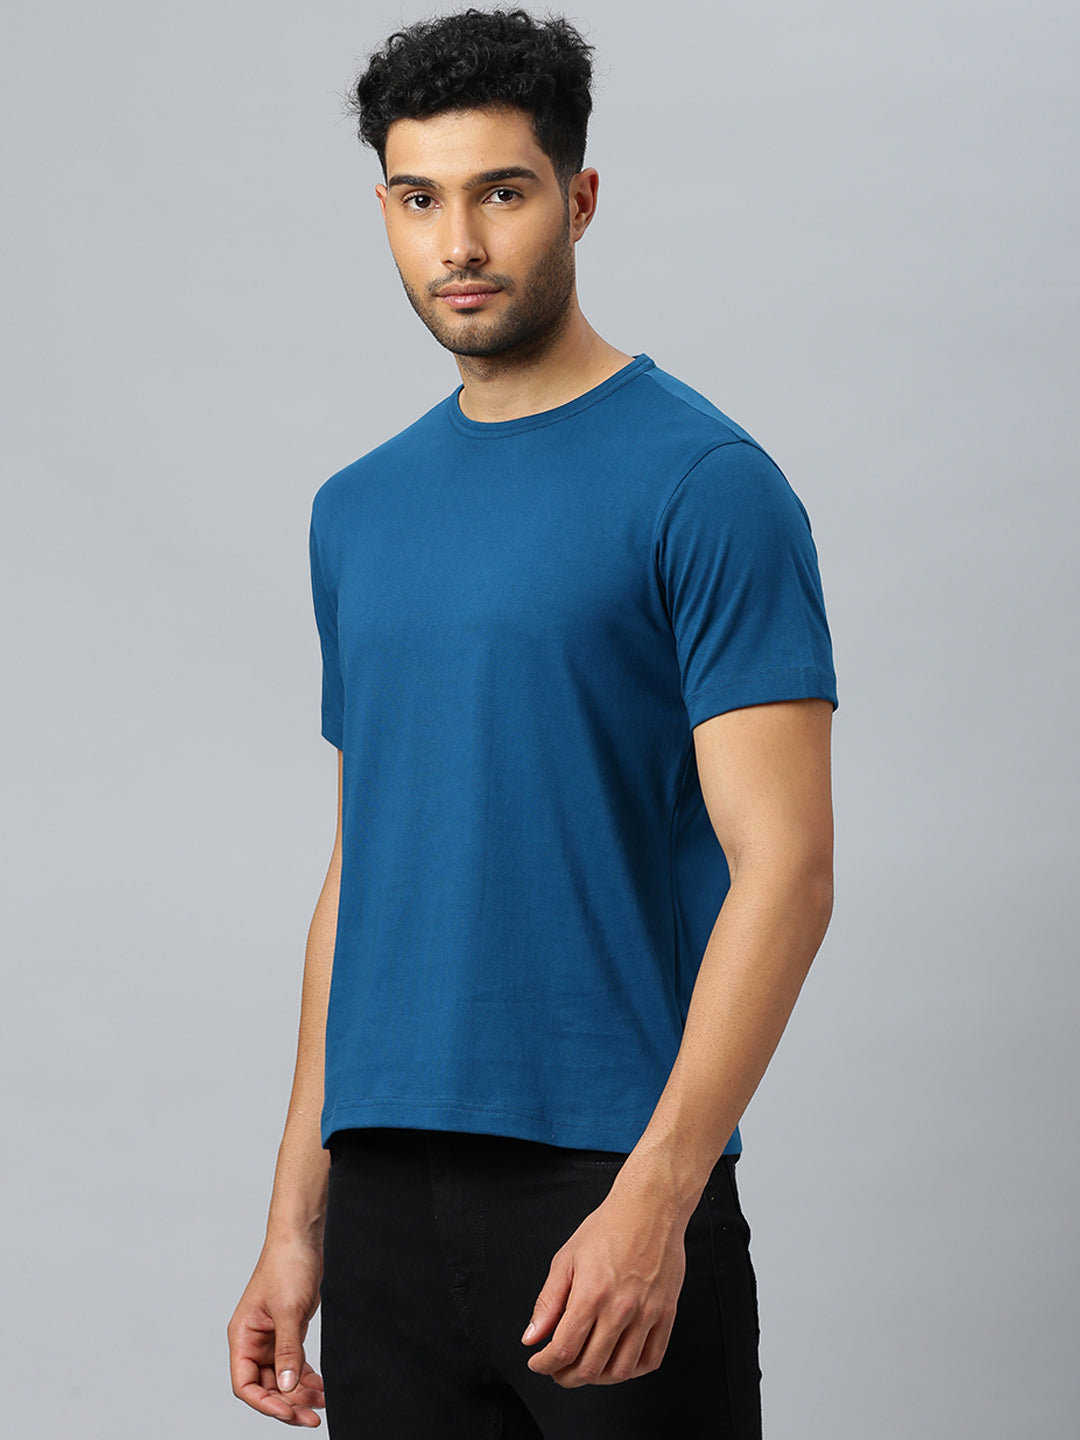 Don Vino Men's Dark Blue Solid Crew Neck T-Shirt